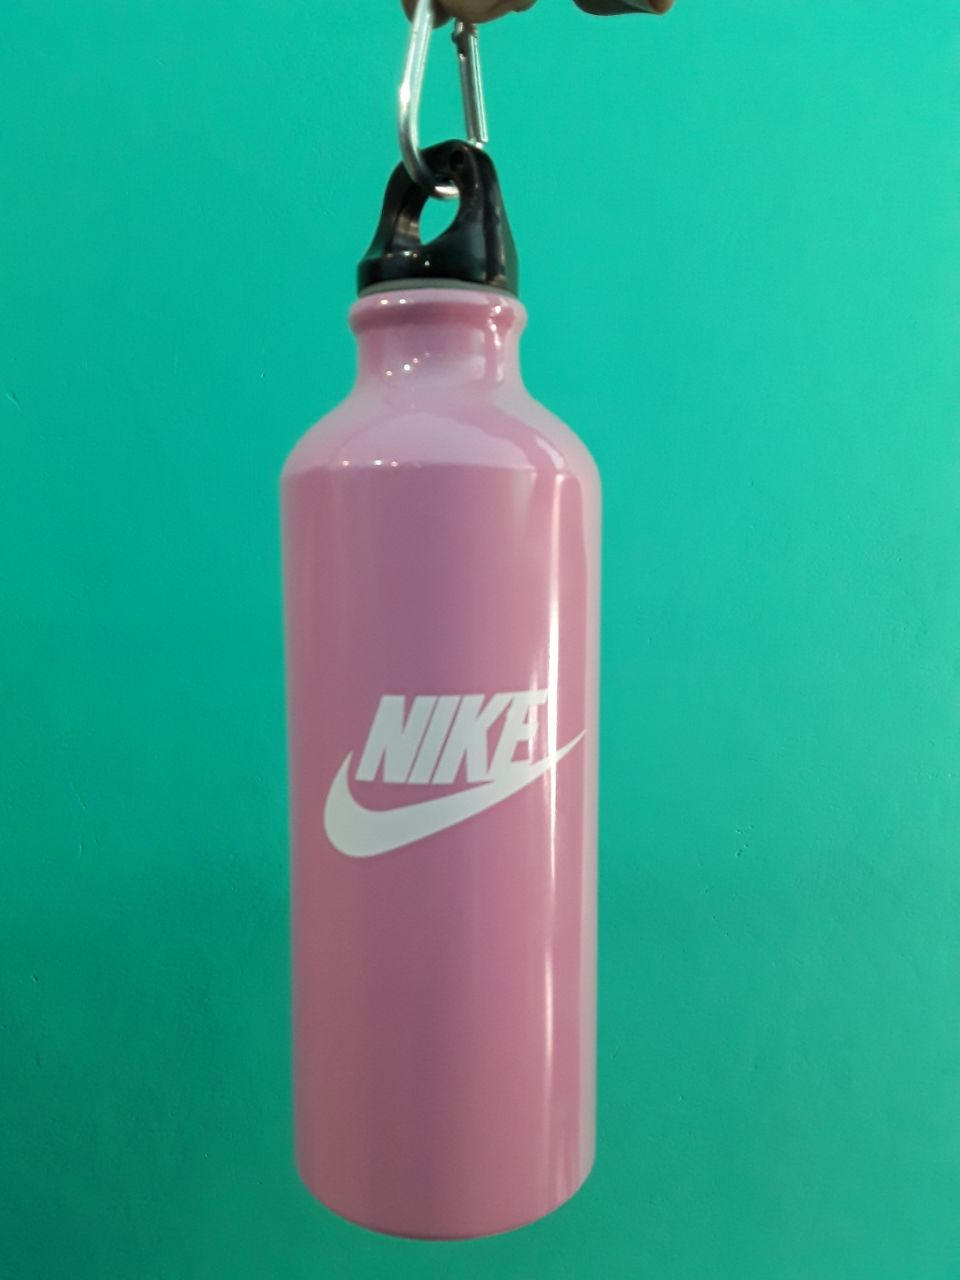 nike metal water bottle